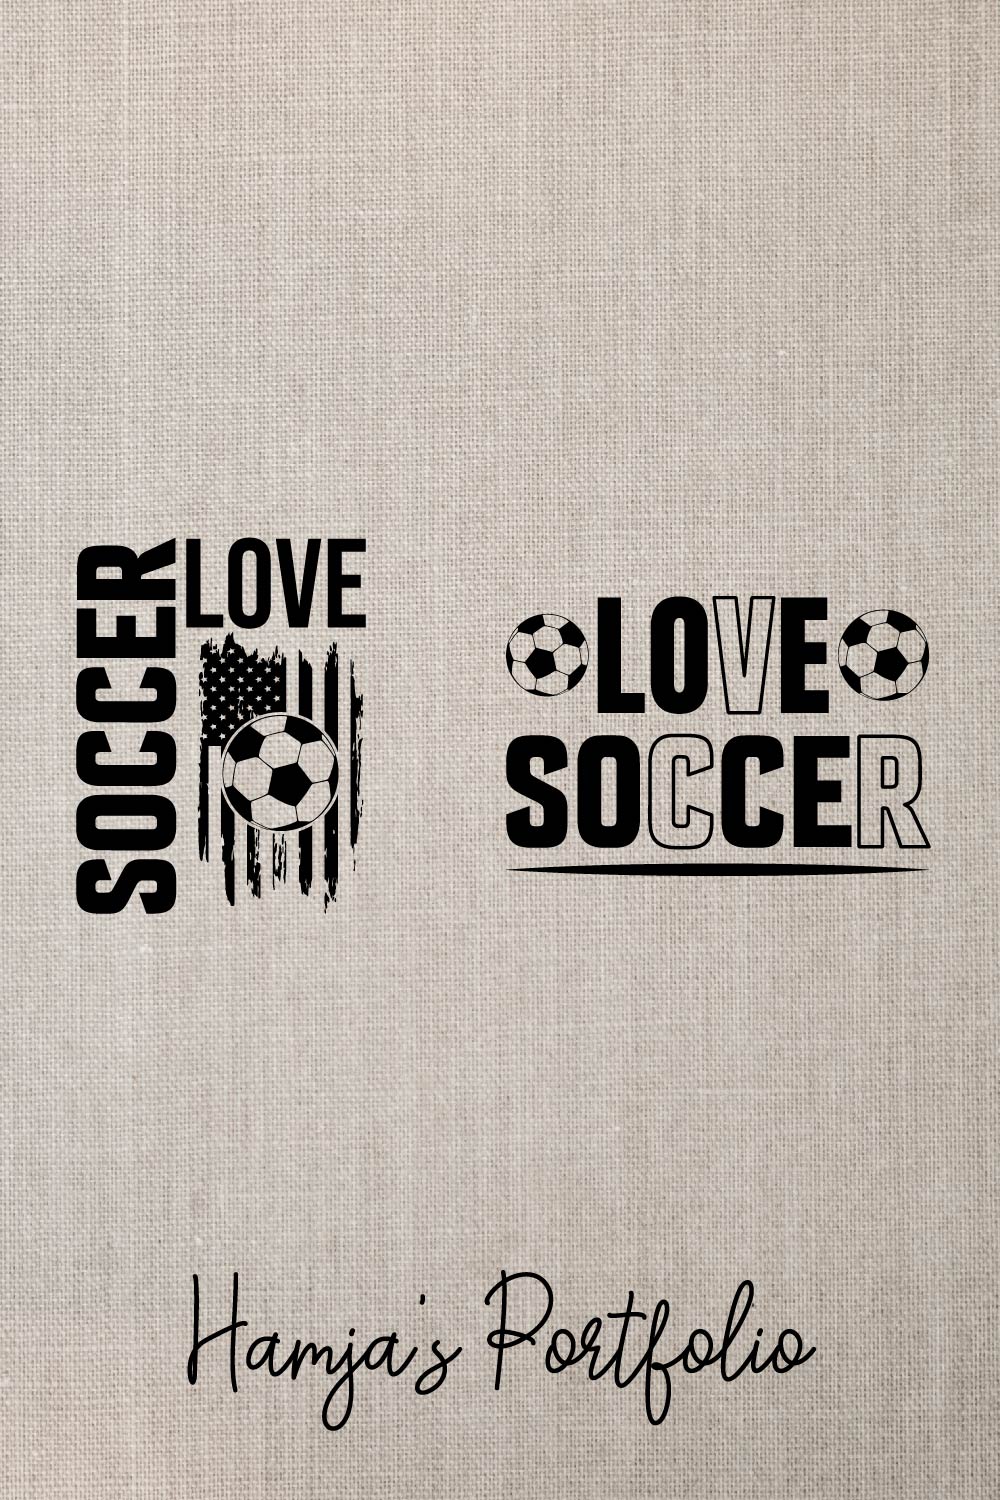 Soccer Lover Vector Svg pinterest preview image.